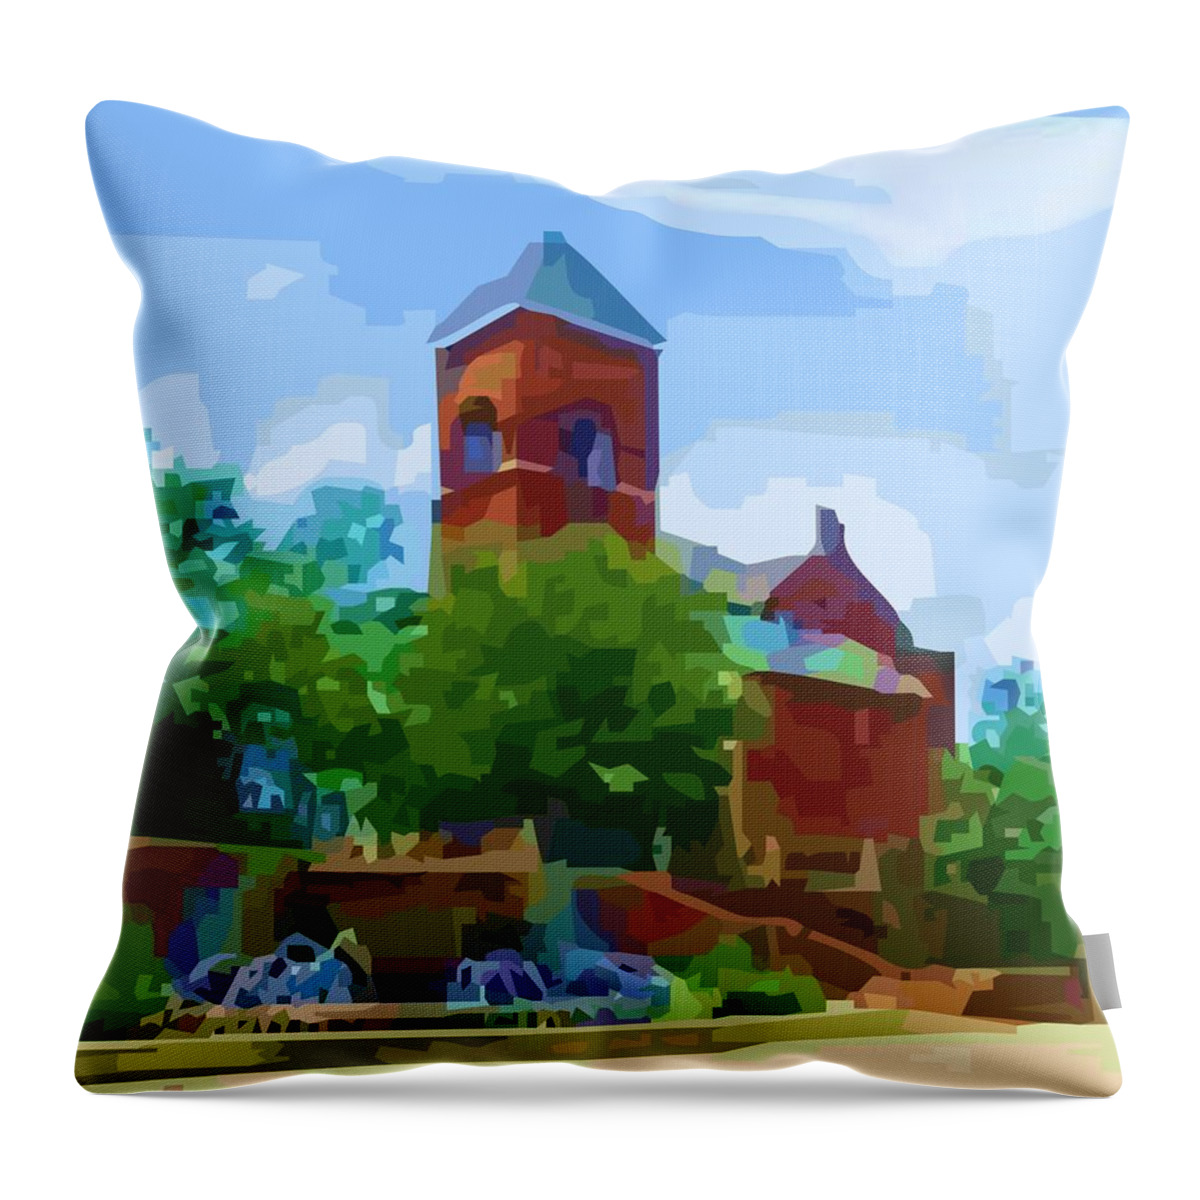 Museu Throw Pillow featuring the digital art Canal church by P Dwain Morris